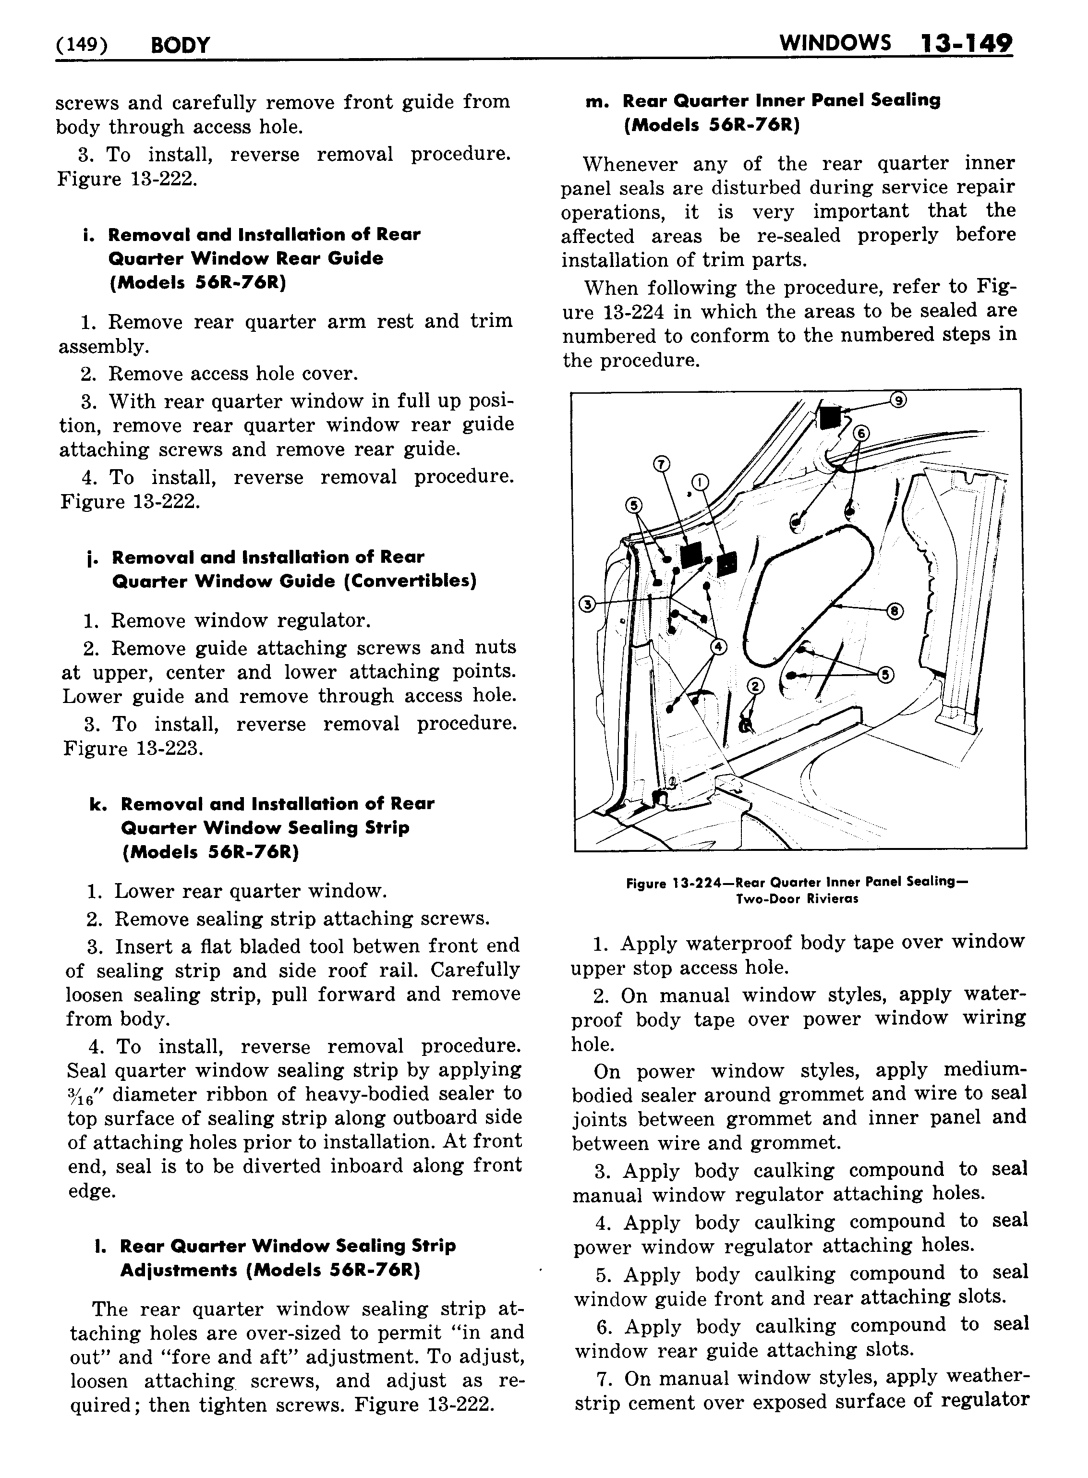 n_1957 Buick Body Service Manual-151-151.jpg